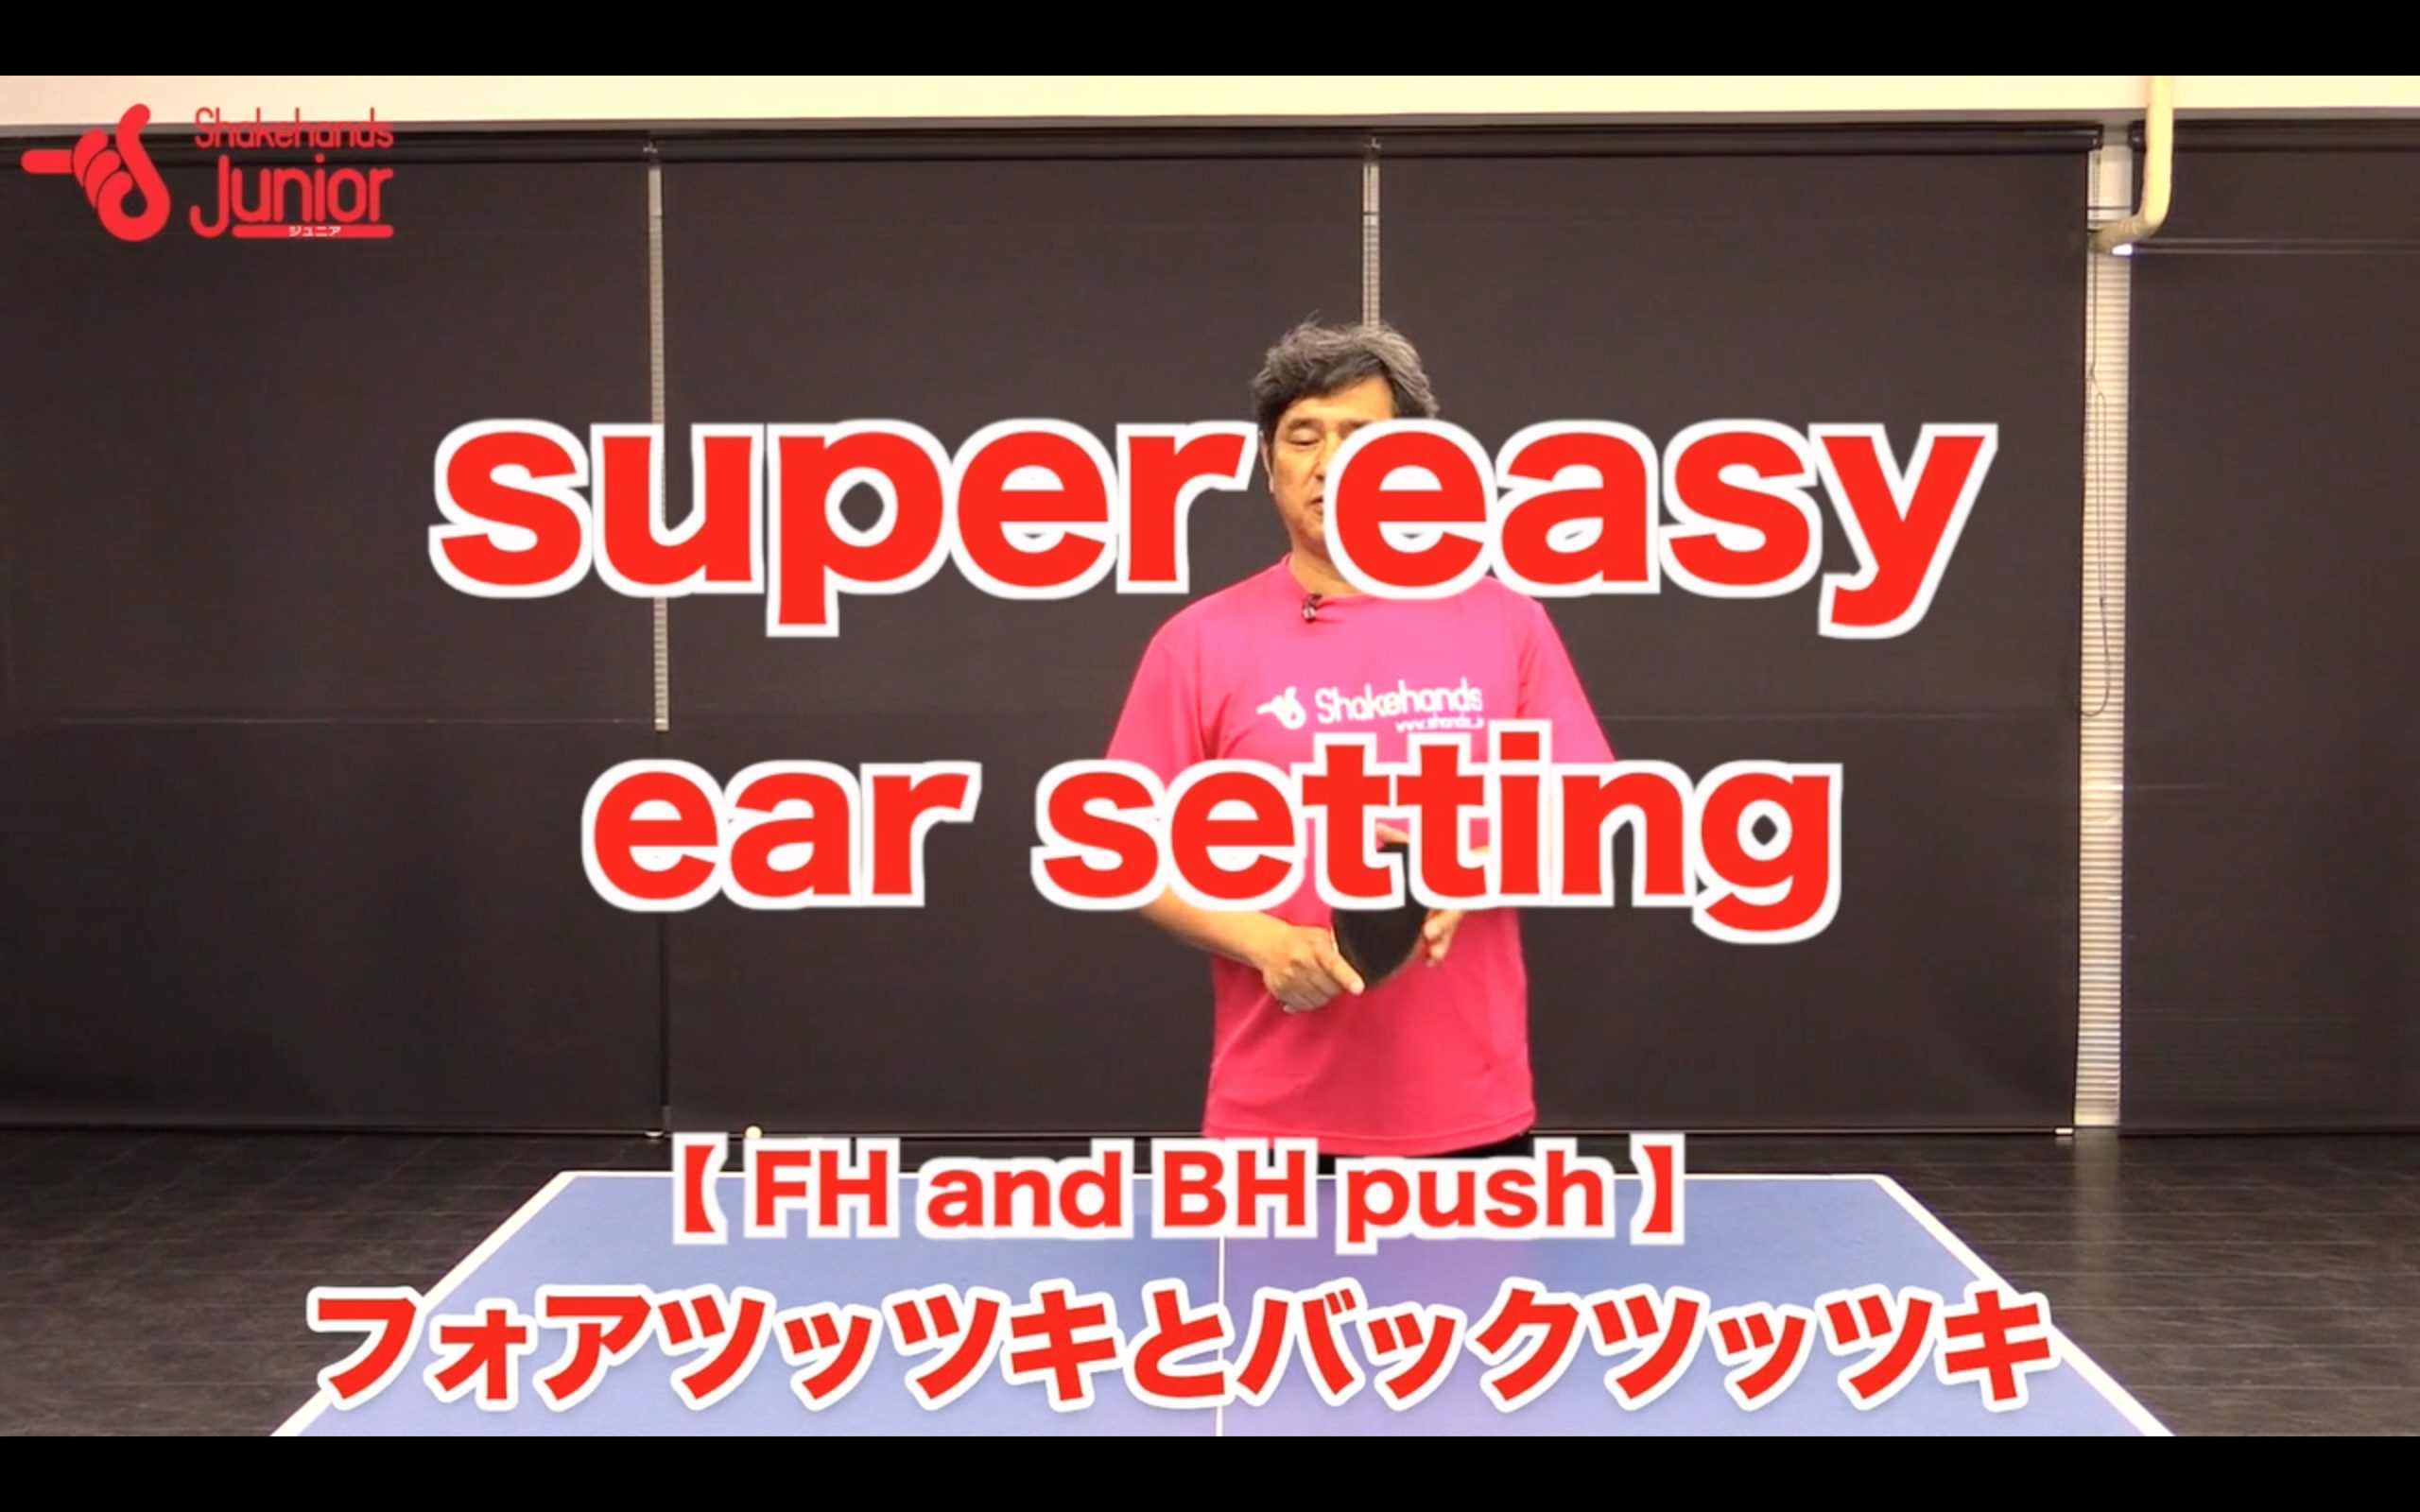 Super easy ear setting push